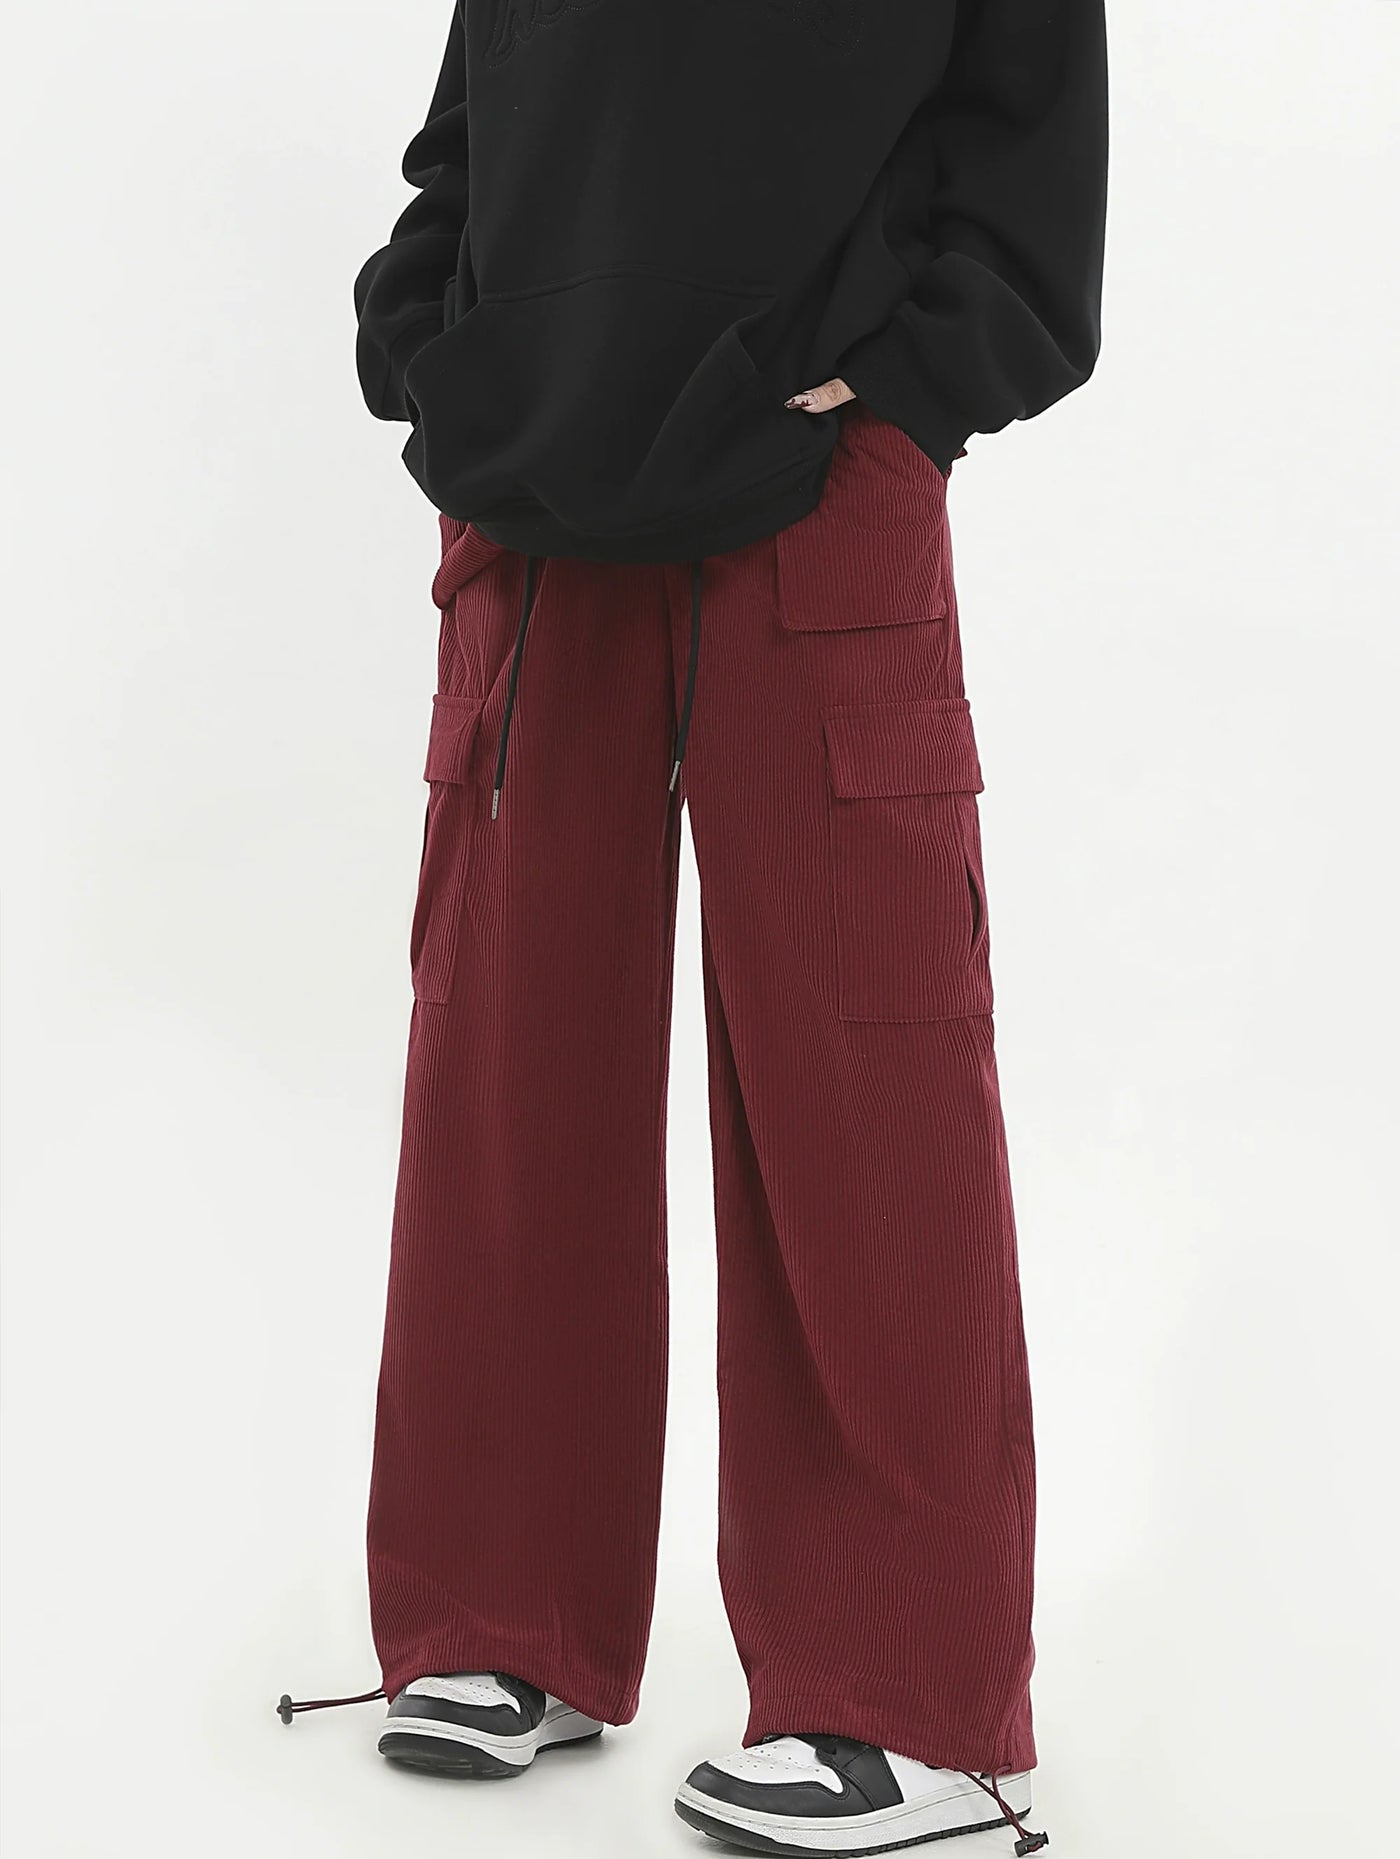 Drawstring Corduroy Cargo Pants Korean Street Fashion Pants By INS Korea Shop Online at OH Vault